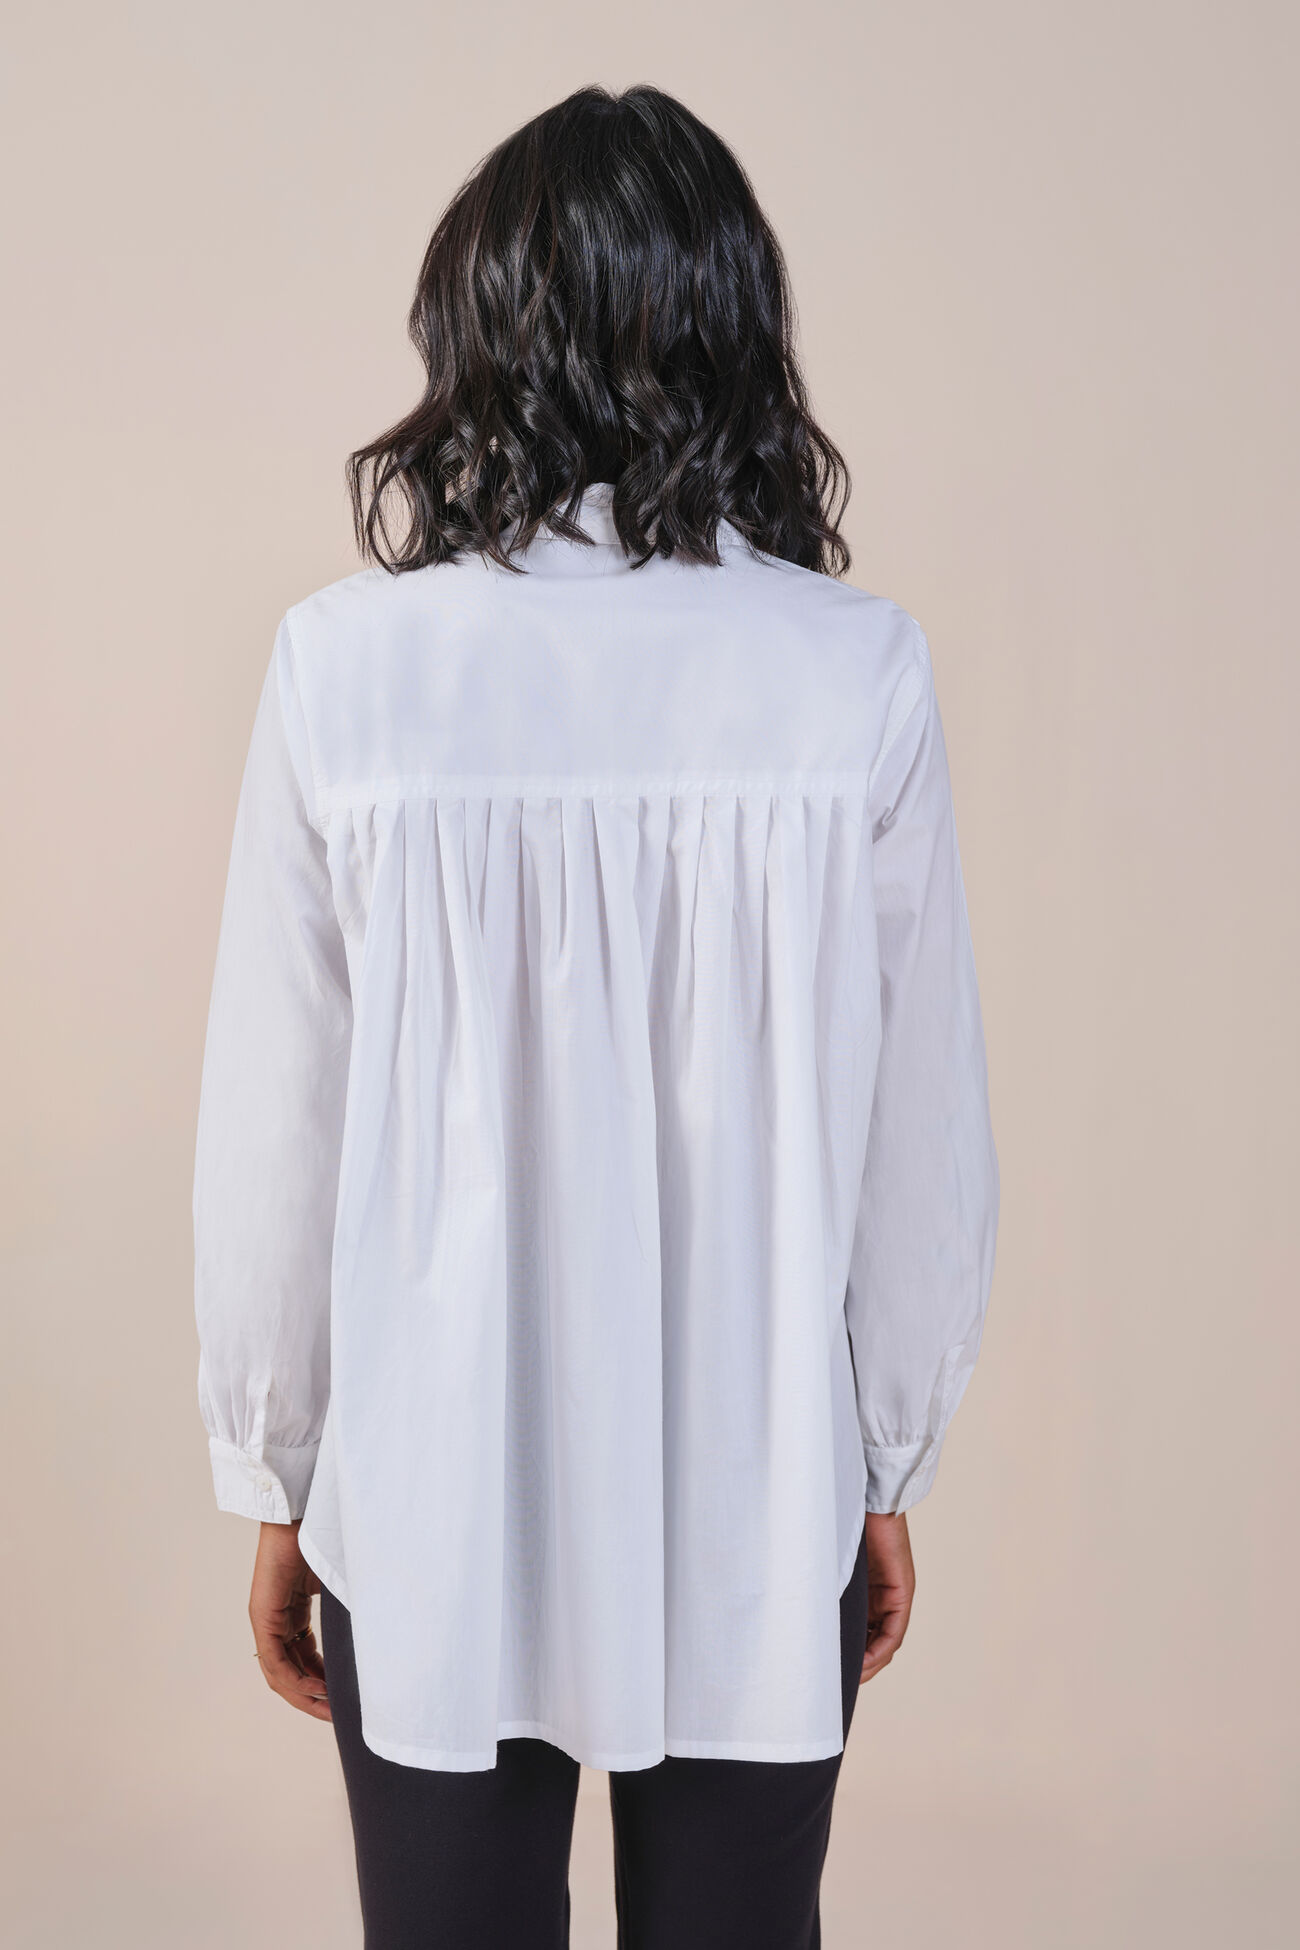 Glow on Cotton Shirt, White, image 4